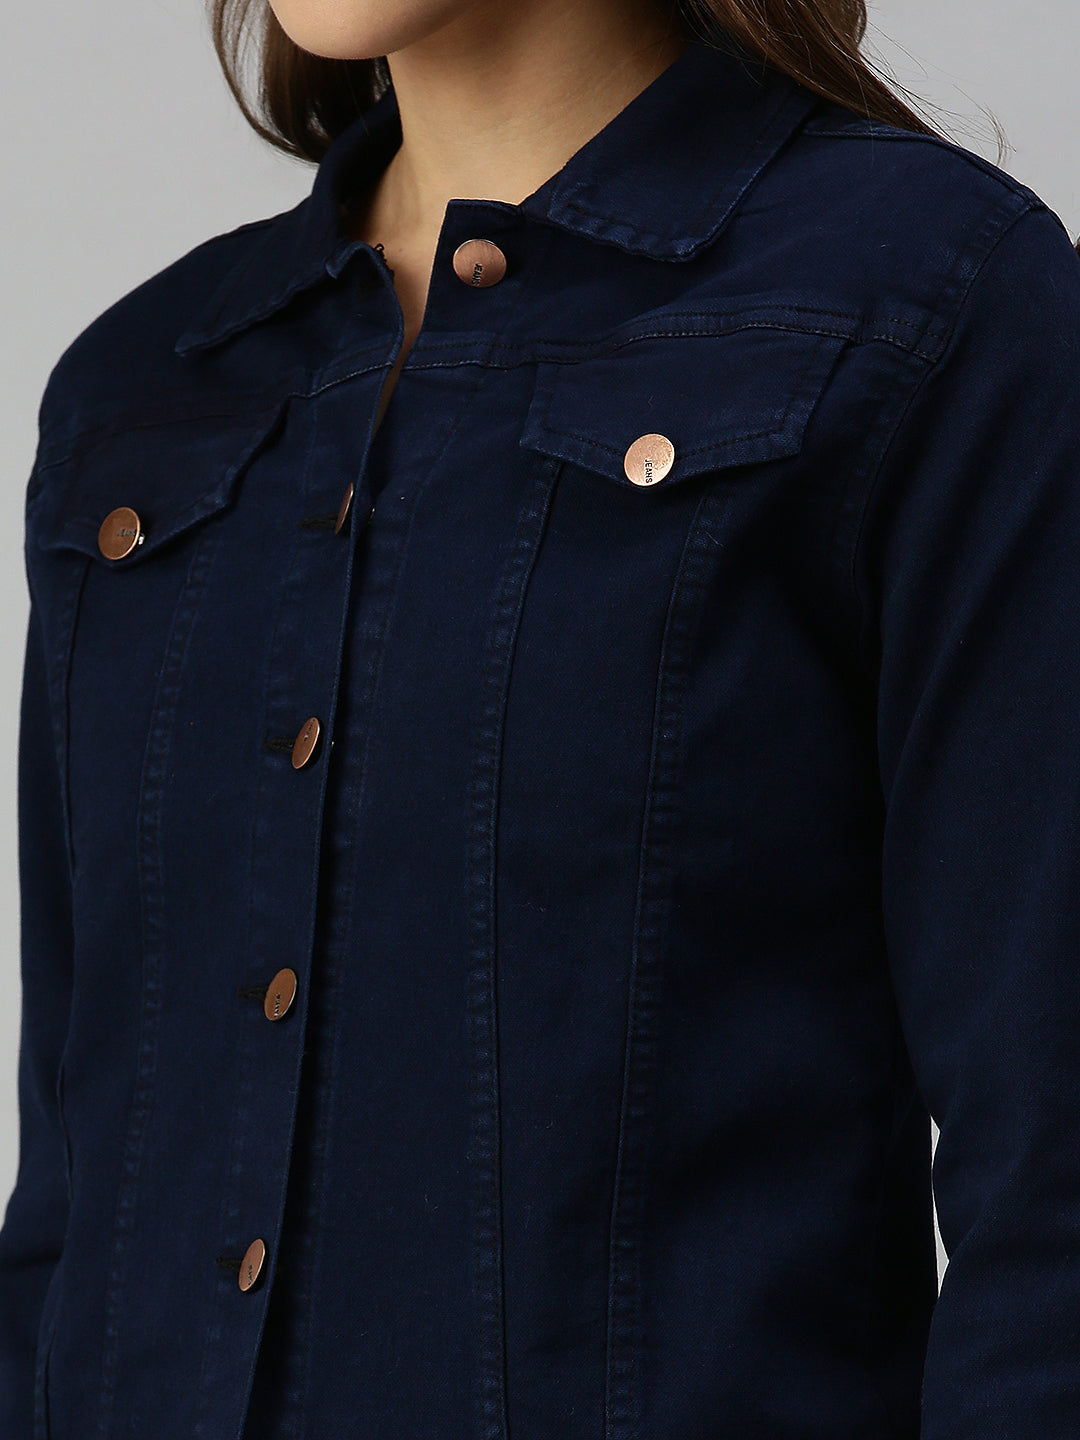 Women Spread Collar Solid Navy Blue Denim Jacket